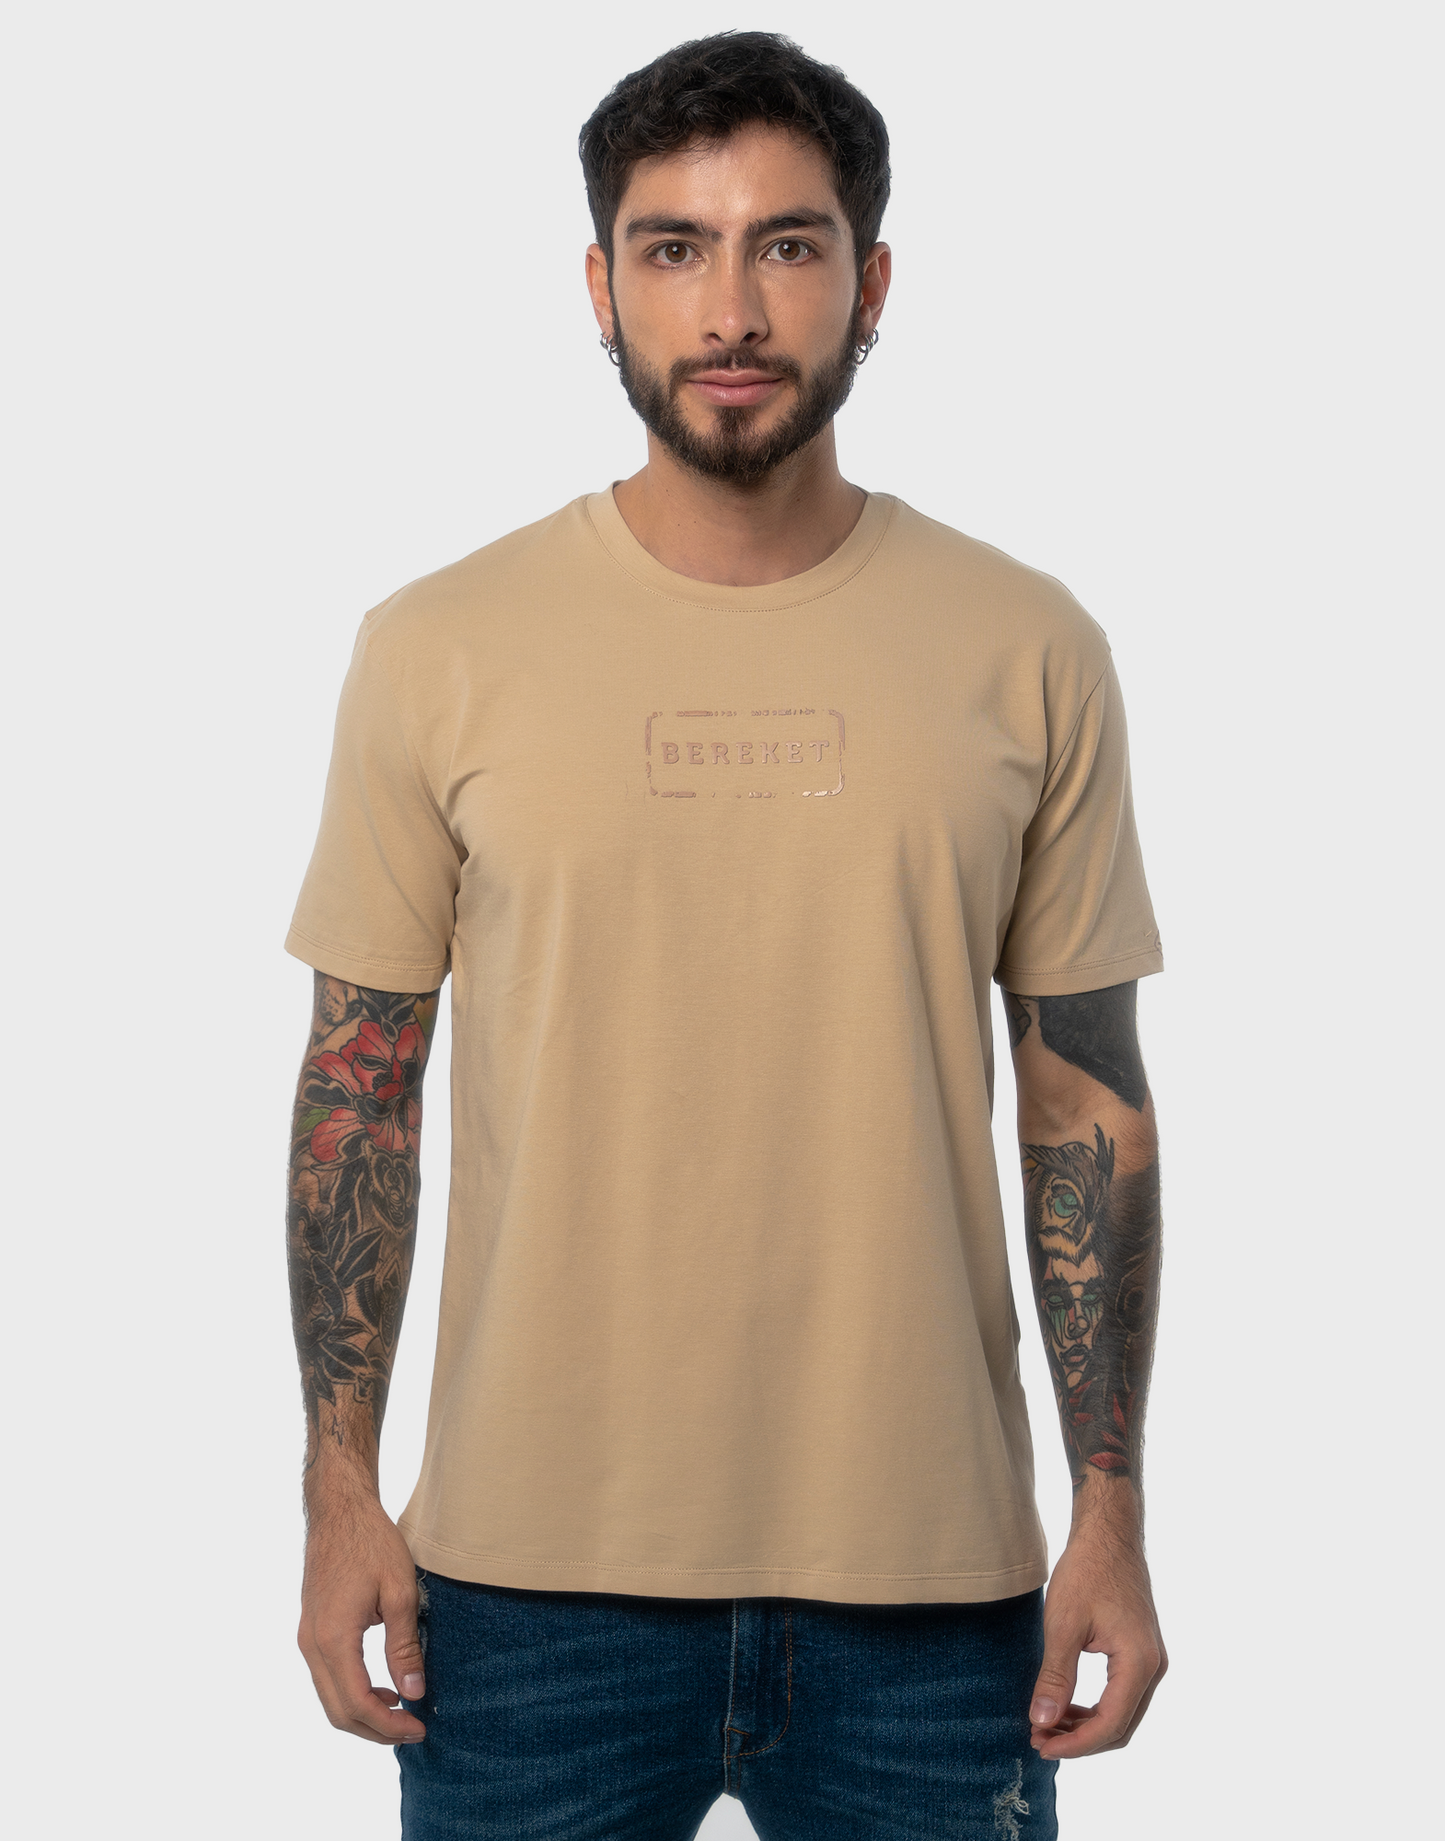 Camiseta hombre beige - N/C